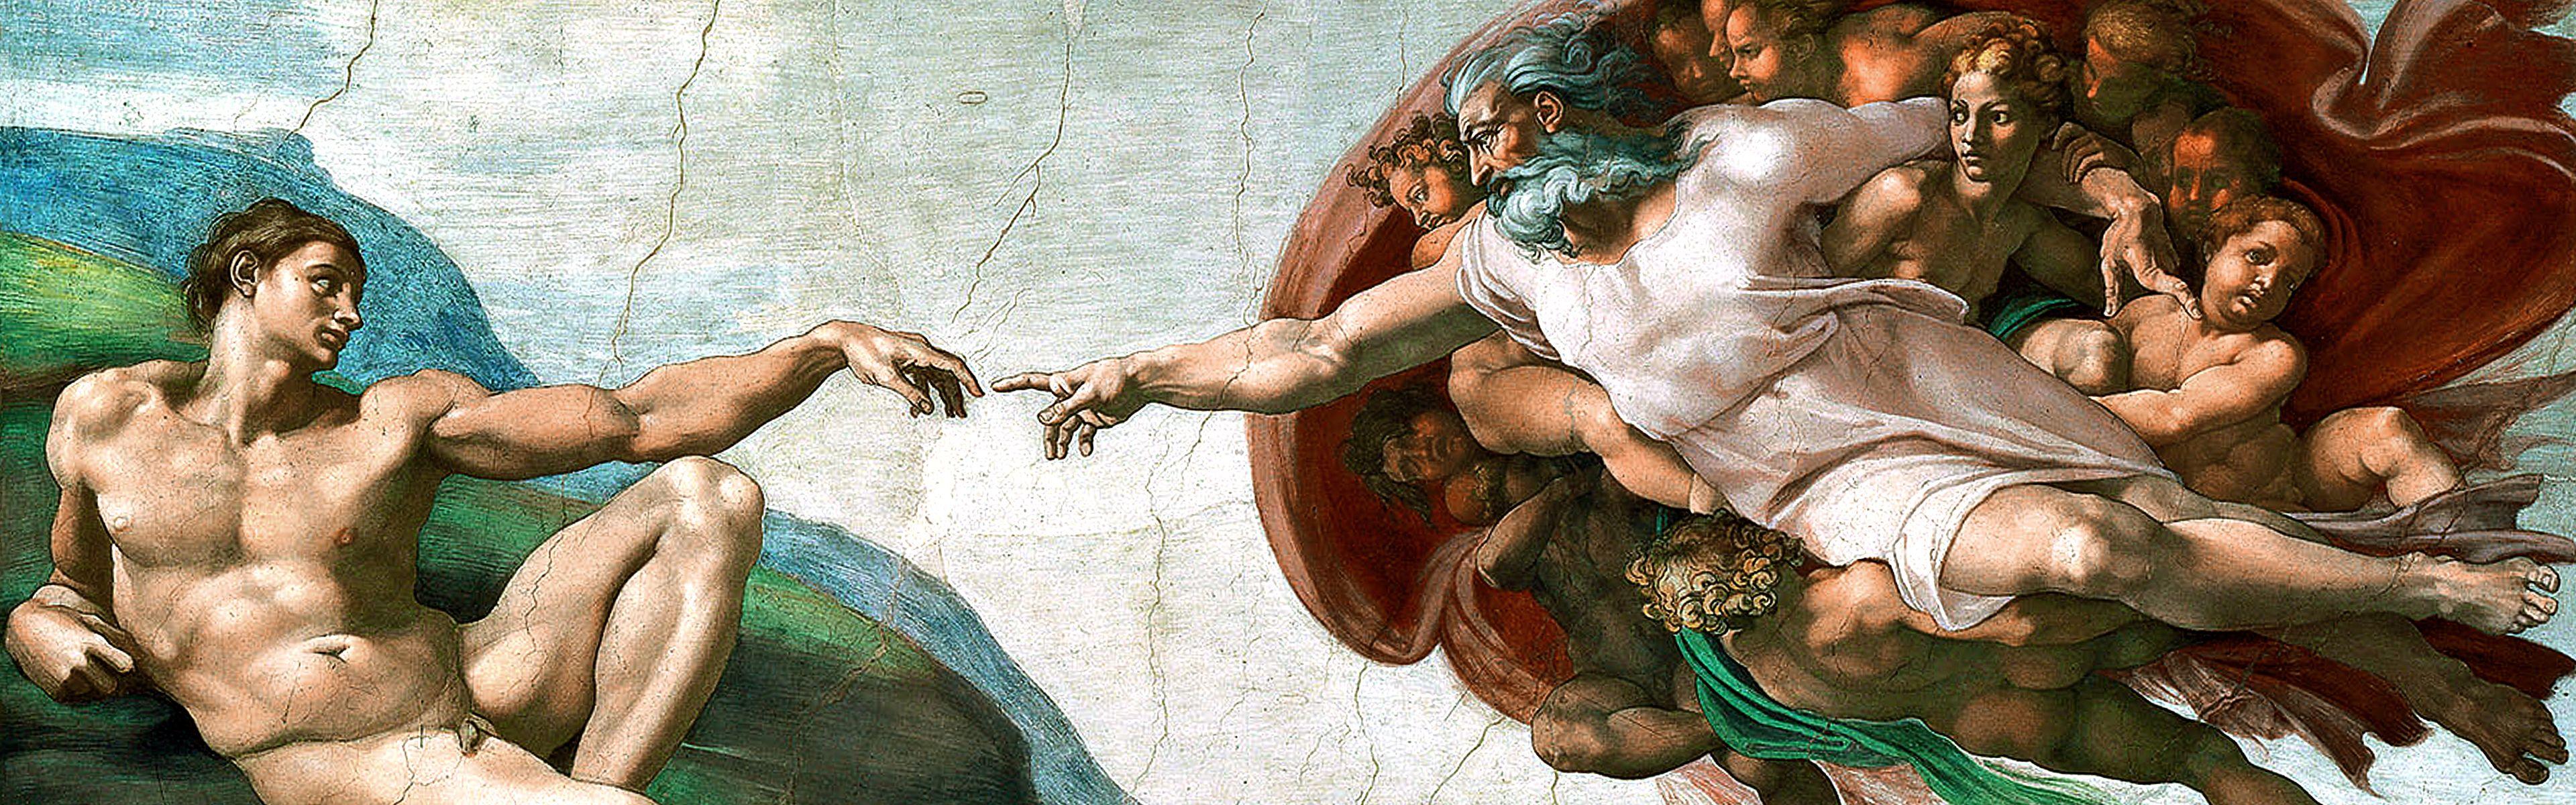 paintings, Michelangelo, The Creation of Adam, Sistine